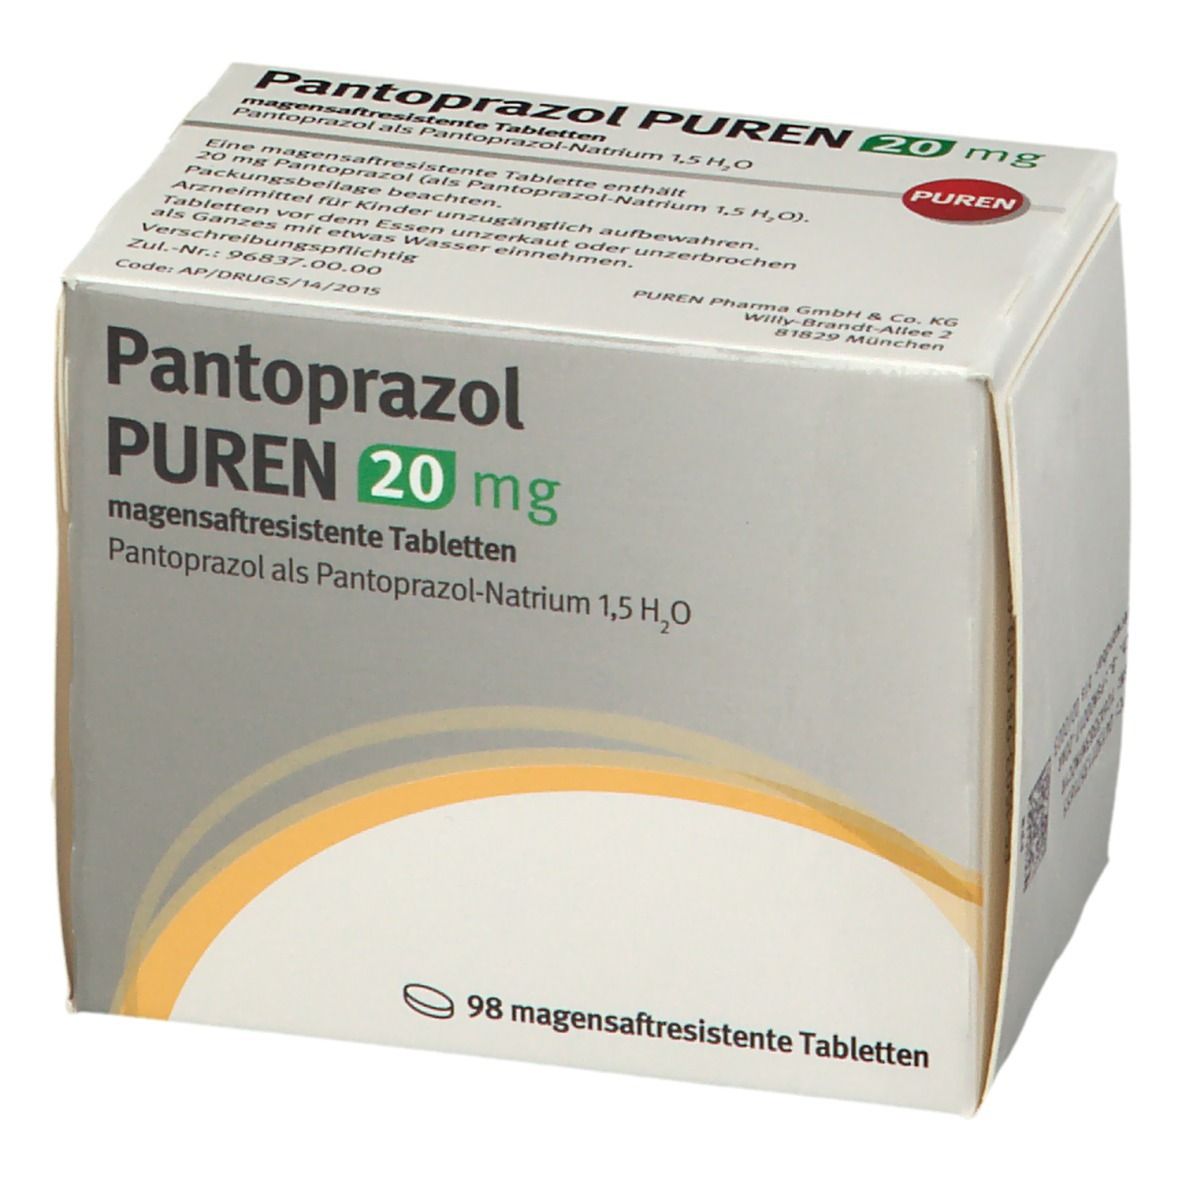 Pantoprazol PUREN 20 mg